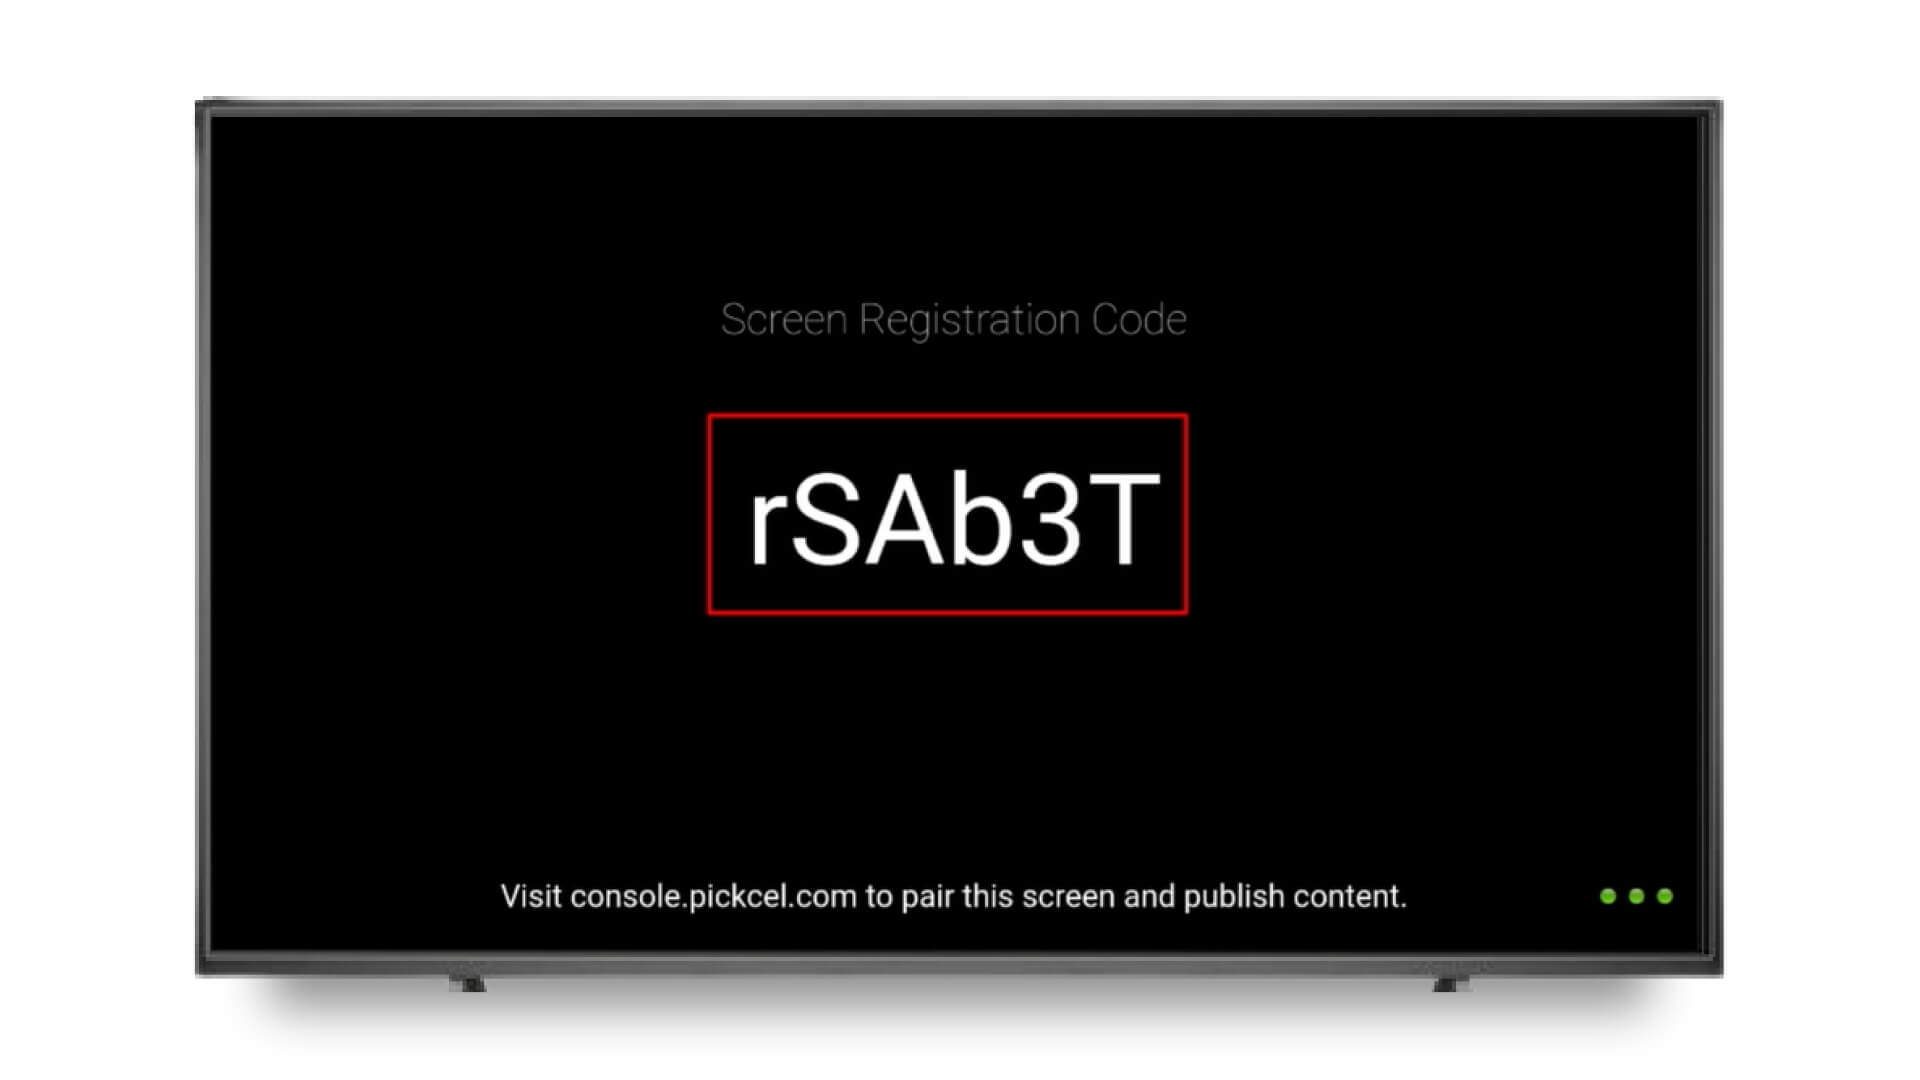 A restaurant digital menu TV shows the Pickcel screen registration code for remote screen pairing